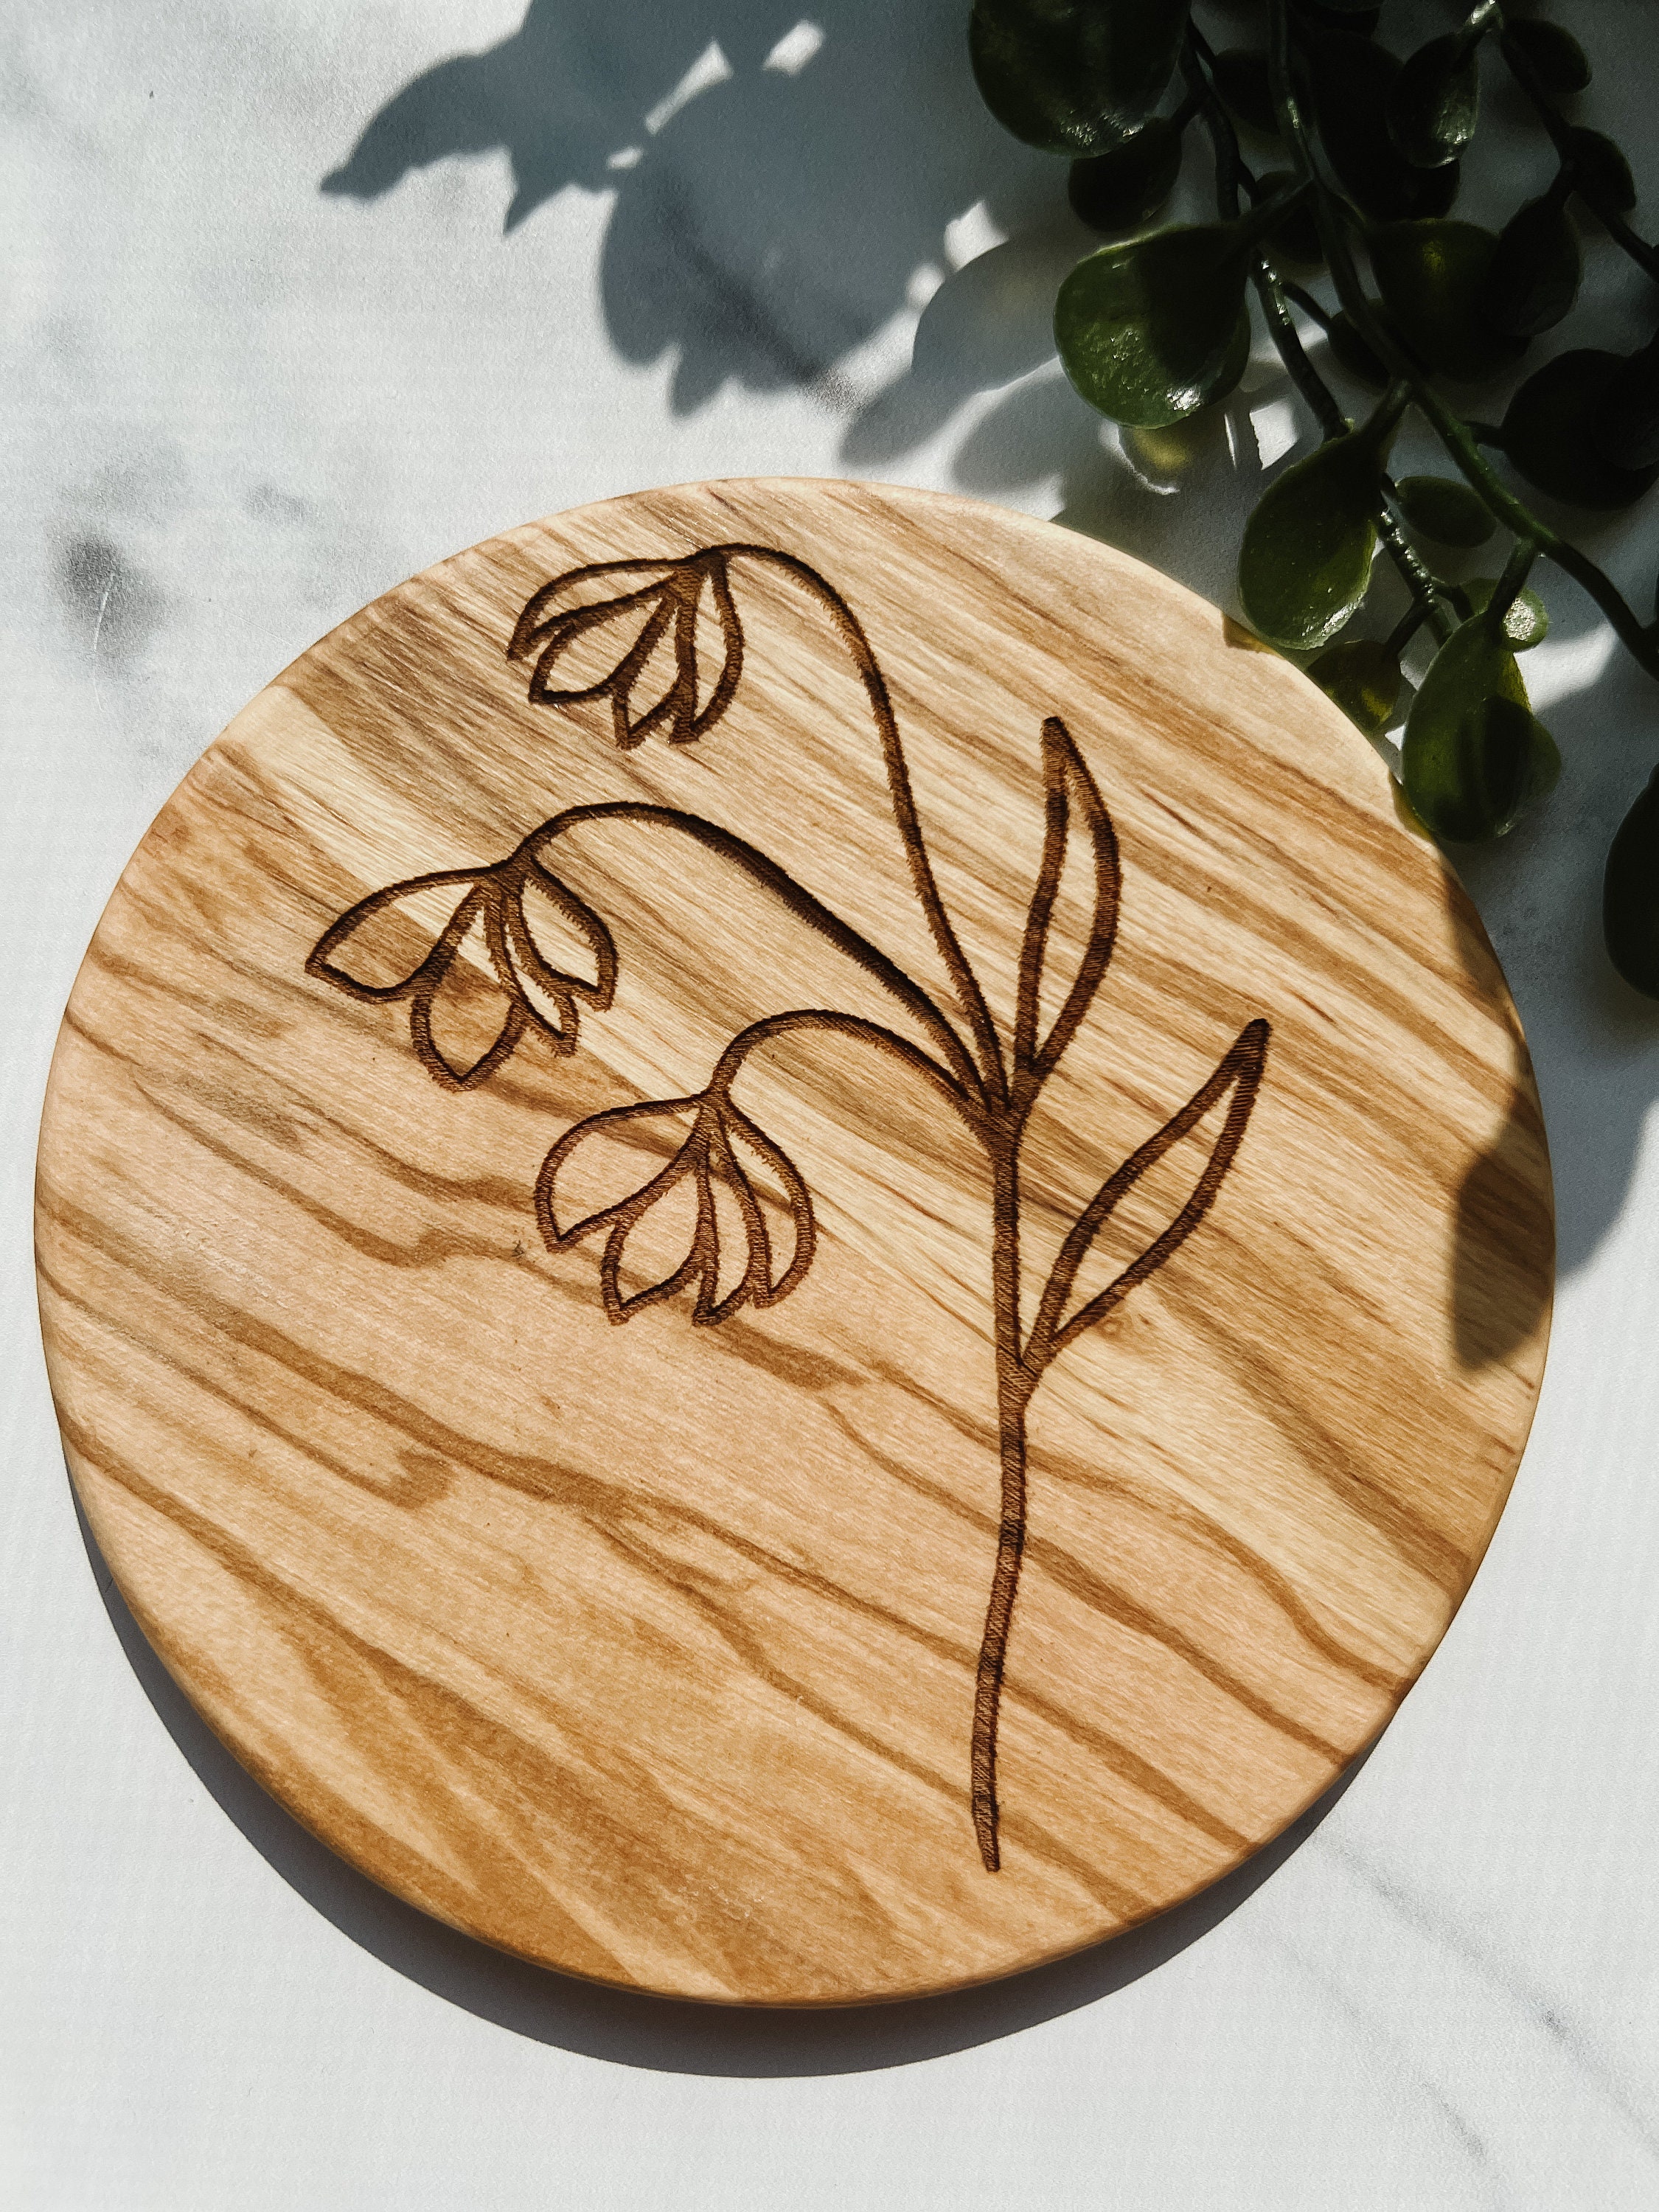 Set of 4 Olive Wood & Armenian Ceramic Coasters - Colorful Flowers